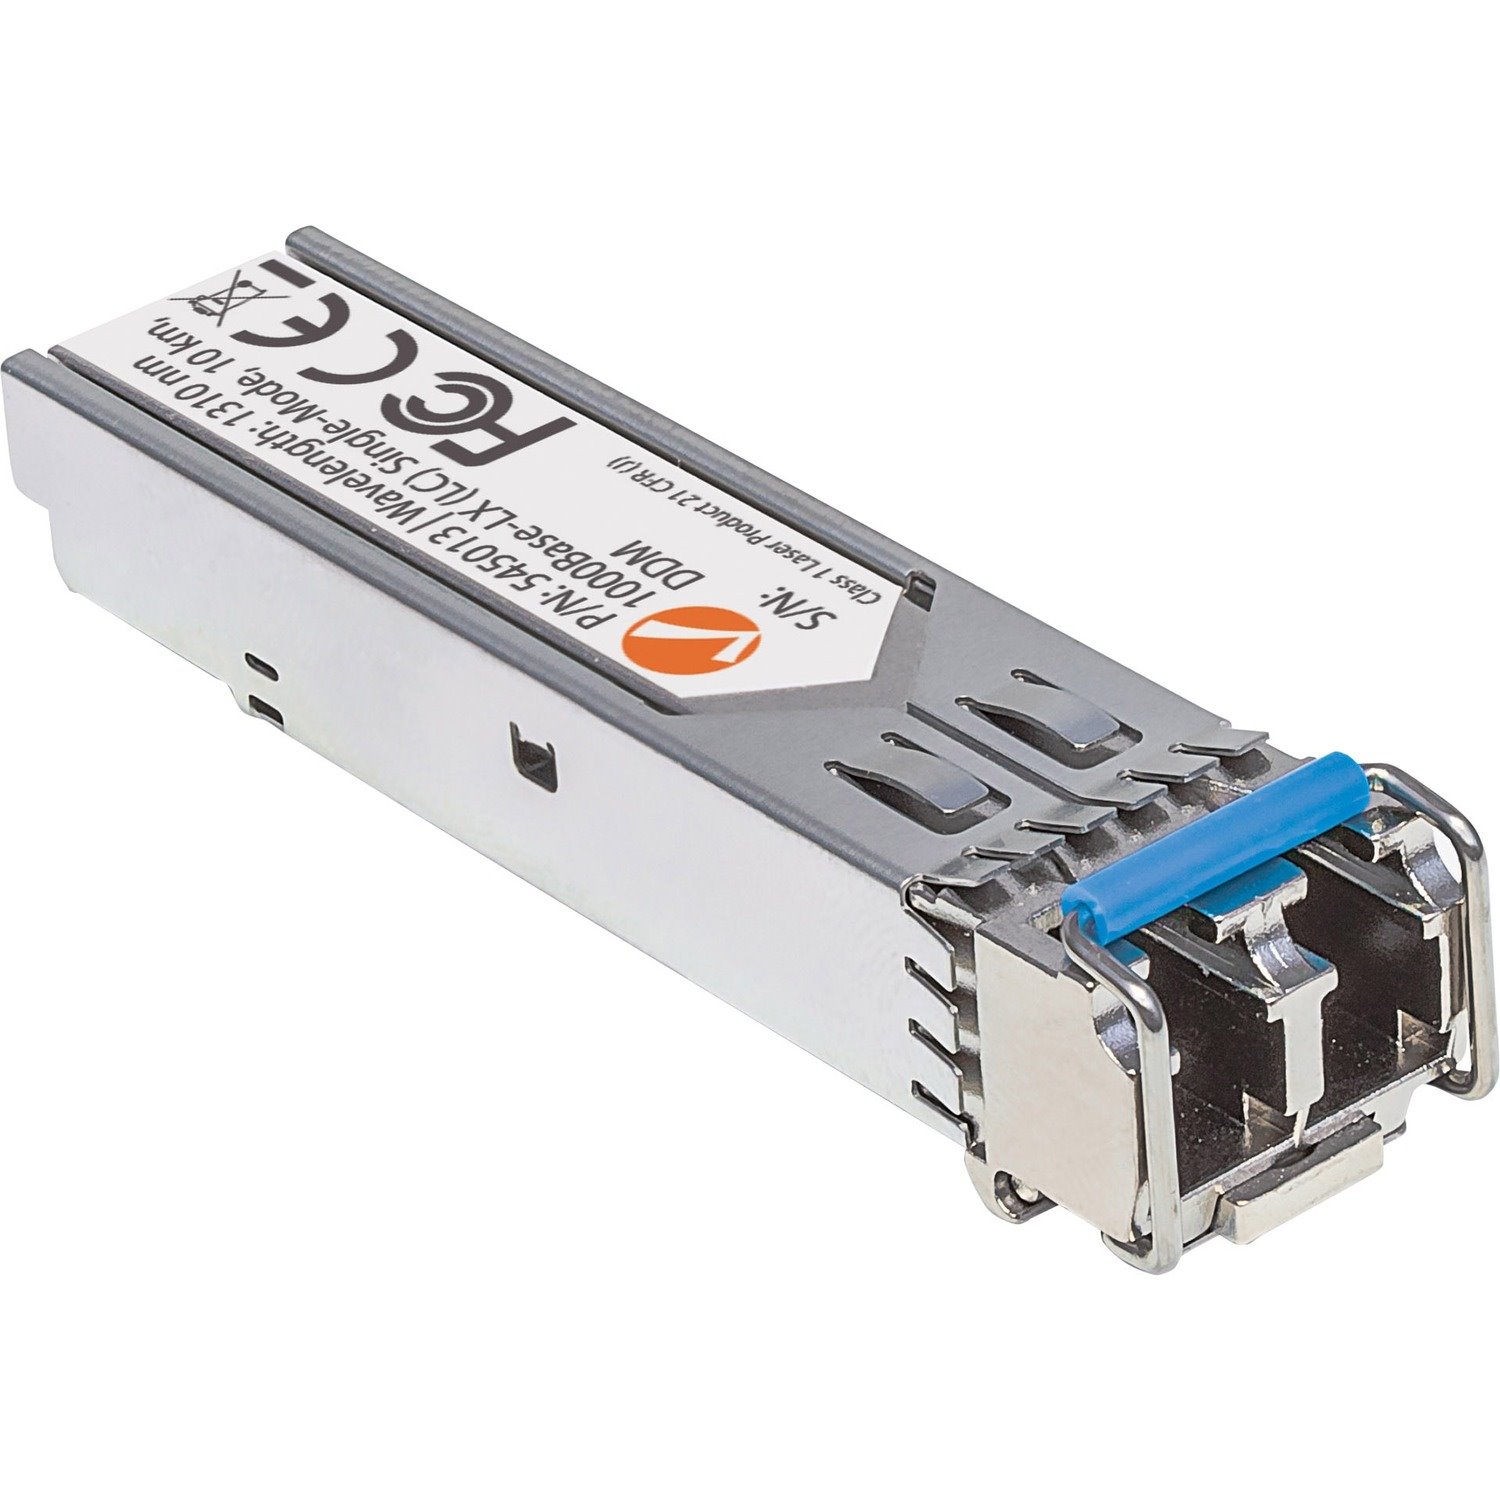 Intellinet Gigabit Fiber SFP+ Optical Transceiver Module, 1000Base-Lx (LC) Port,